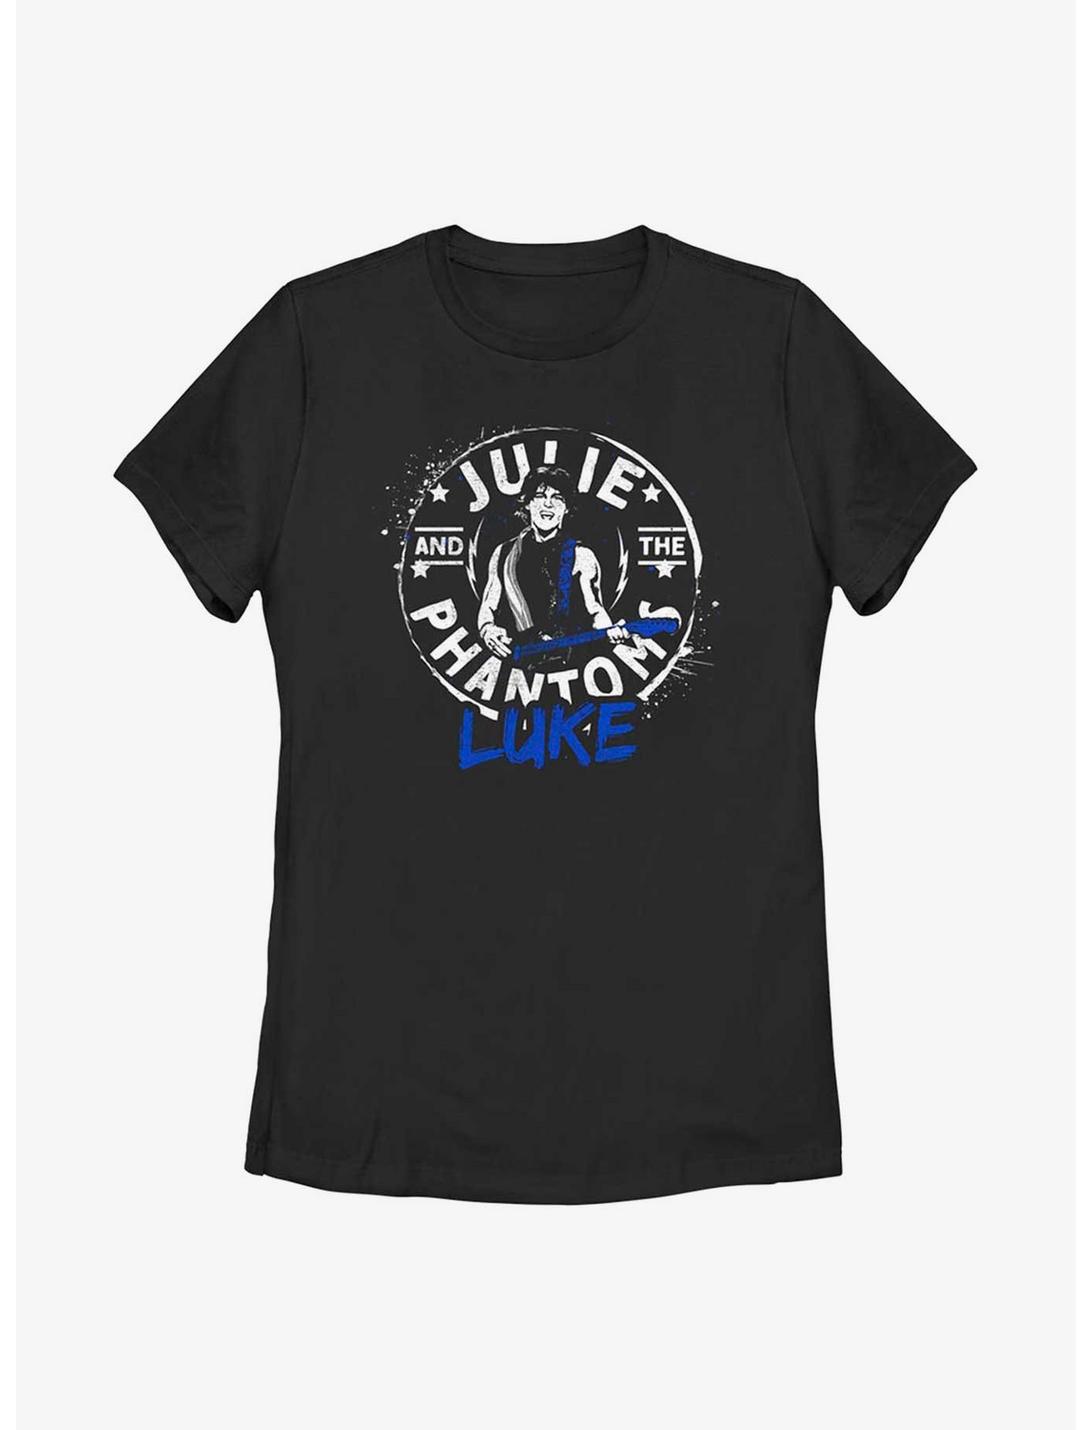 Julie And The Phantoms Luke Grunge Womens T-Shirt, BLACK, hi-res